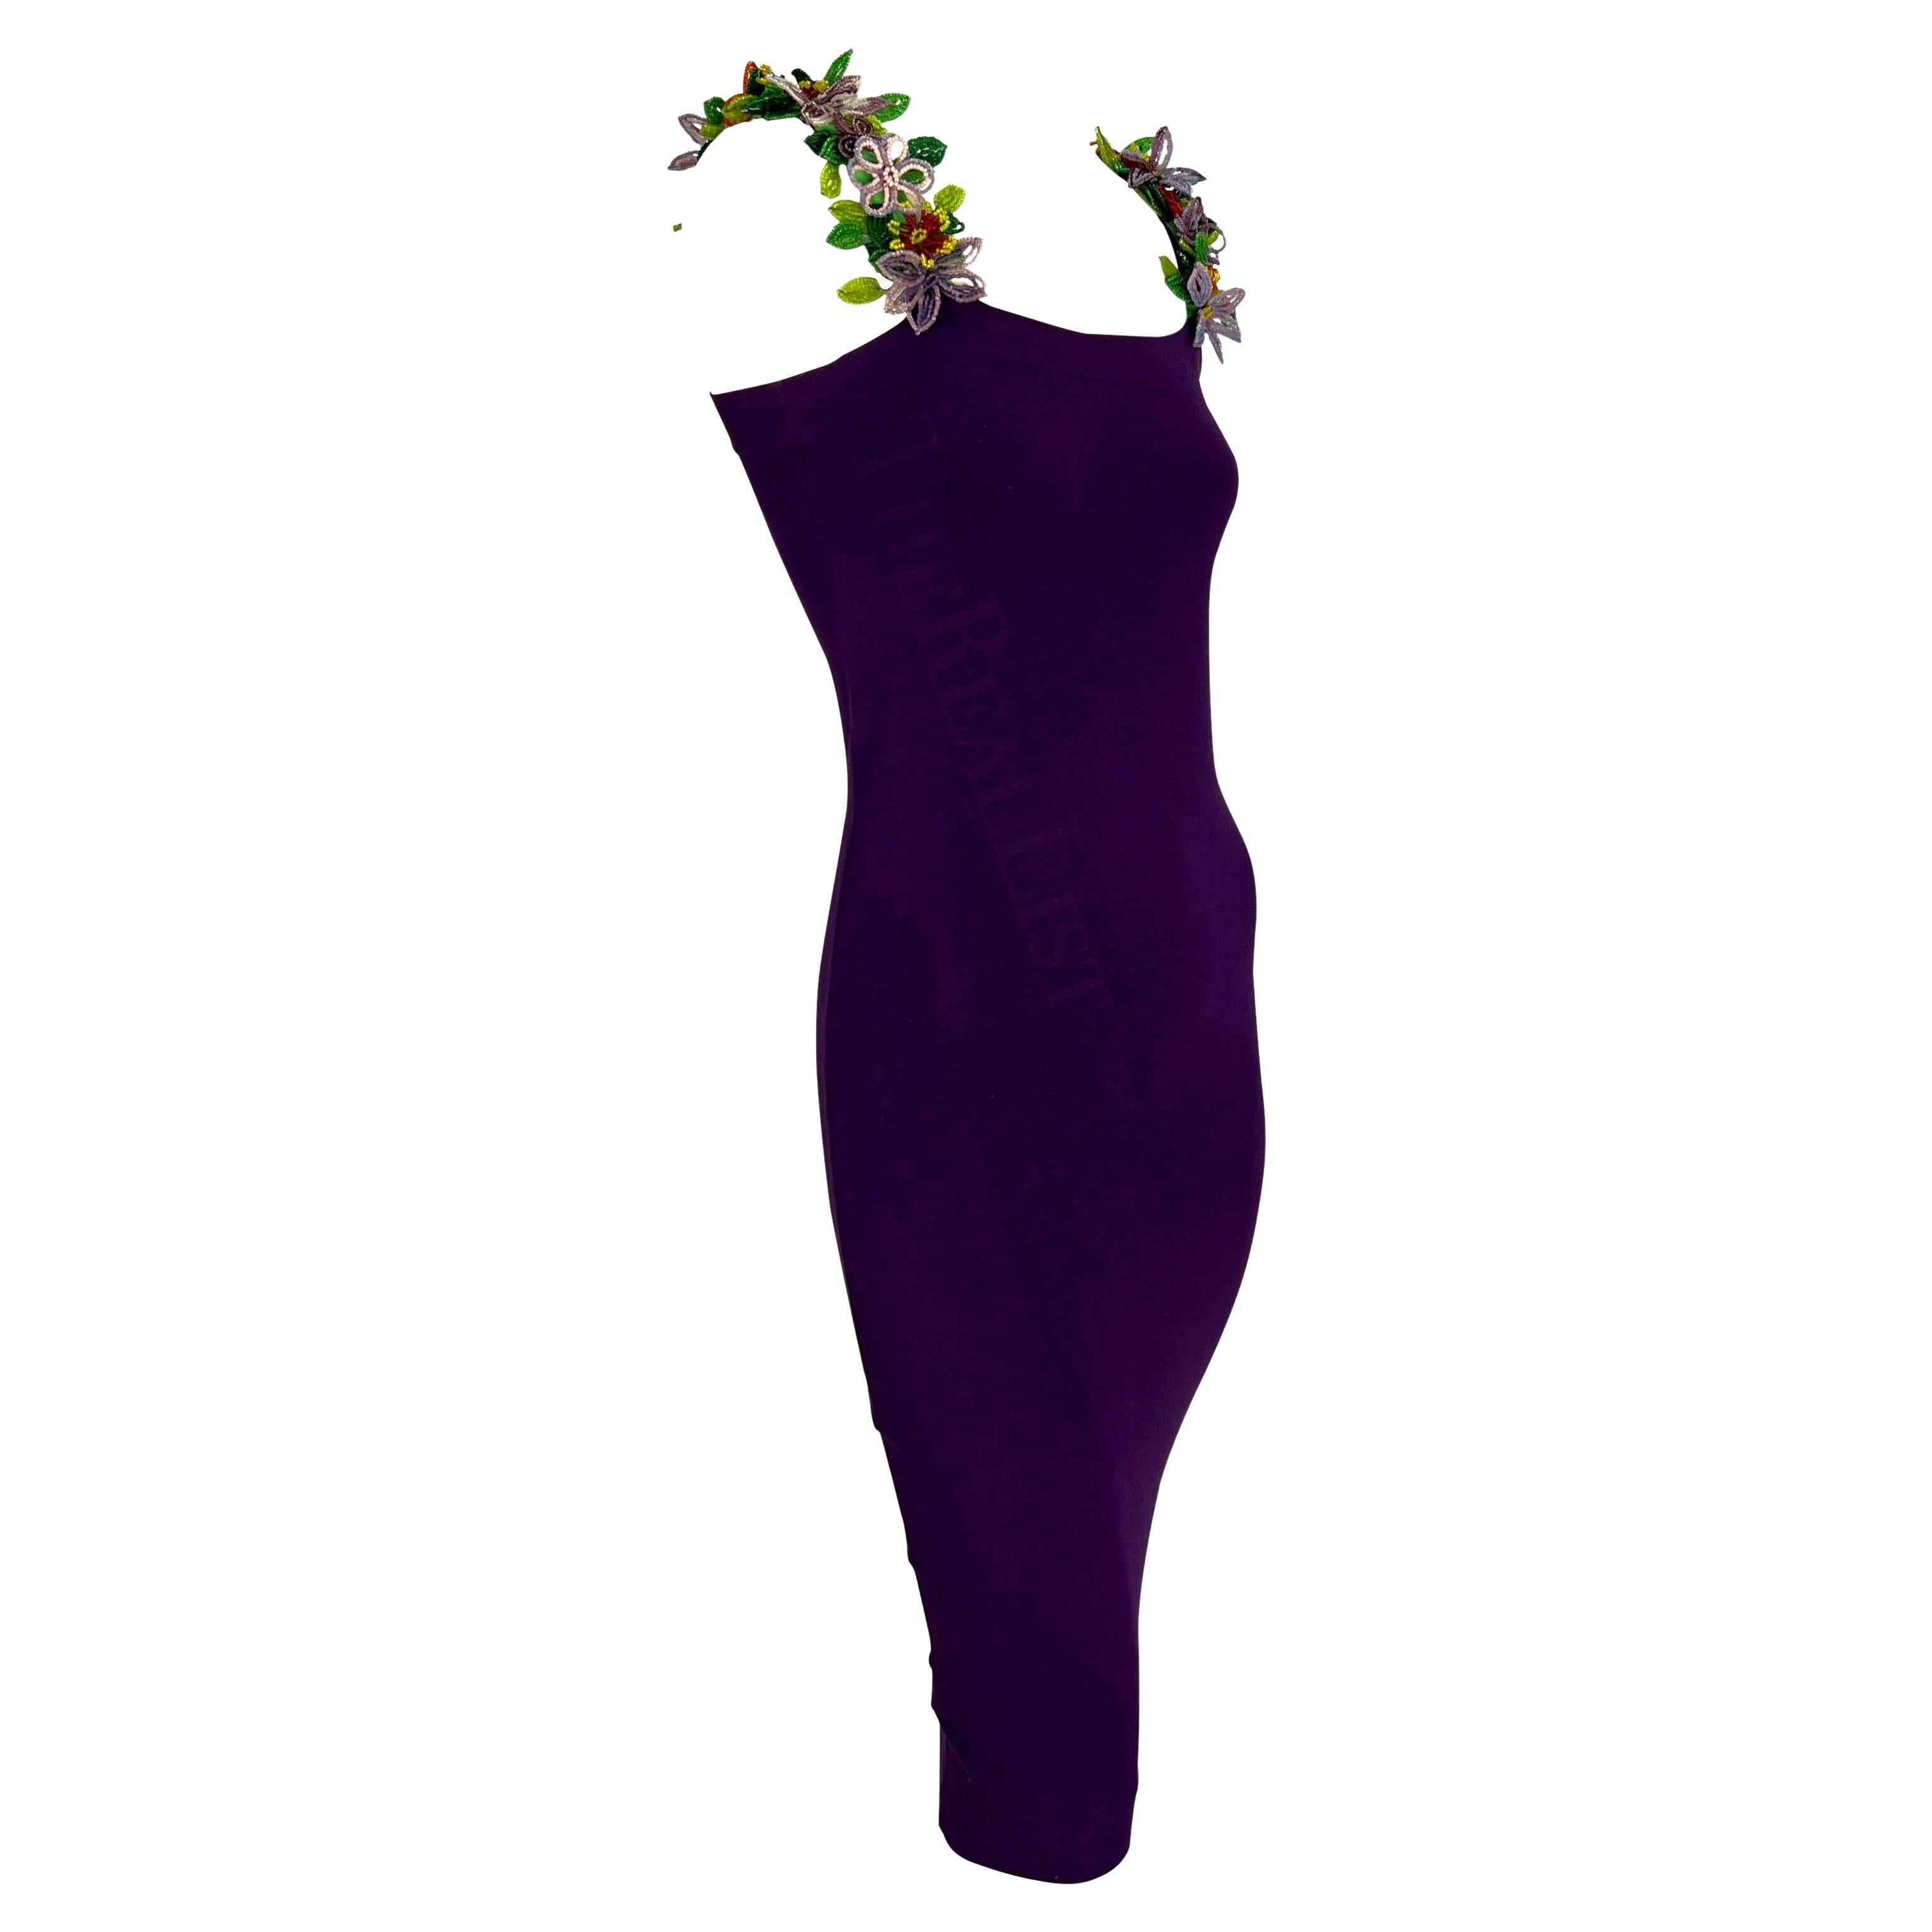 S/S 1992 Dolce & Gabbana Purple Mini Dress Floral Beaded Straps 7